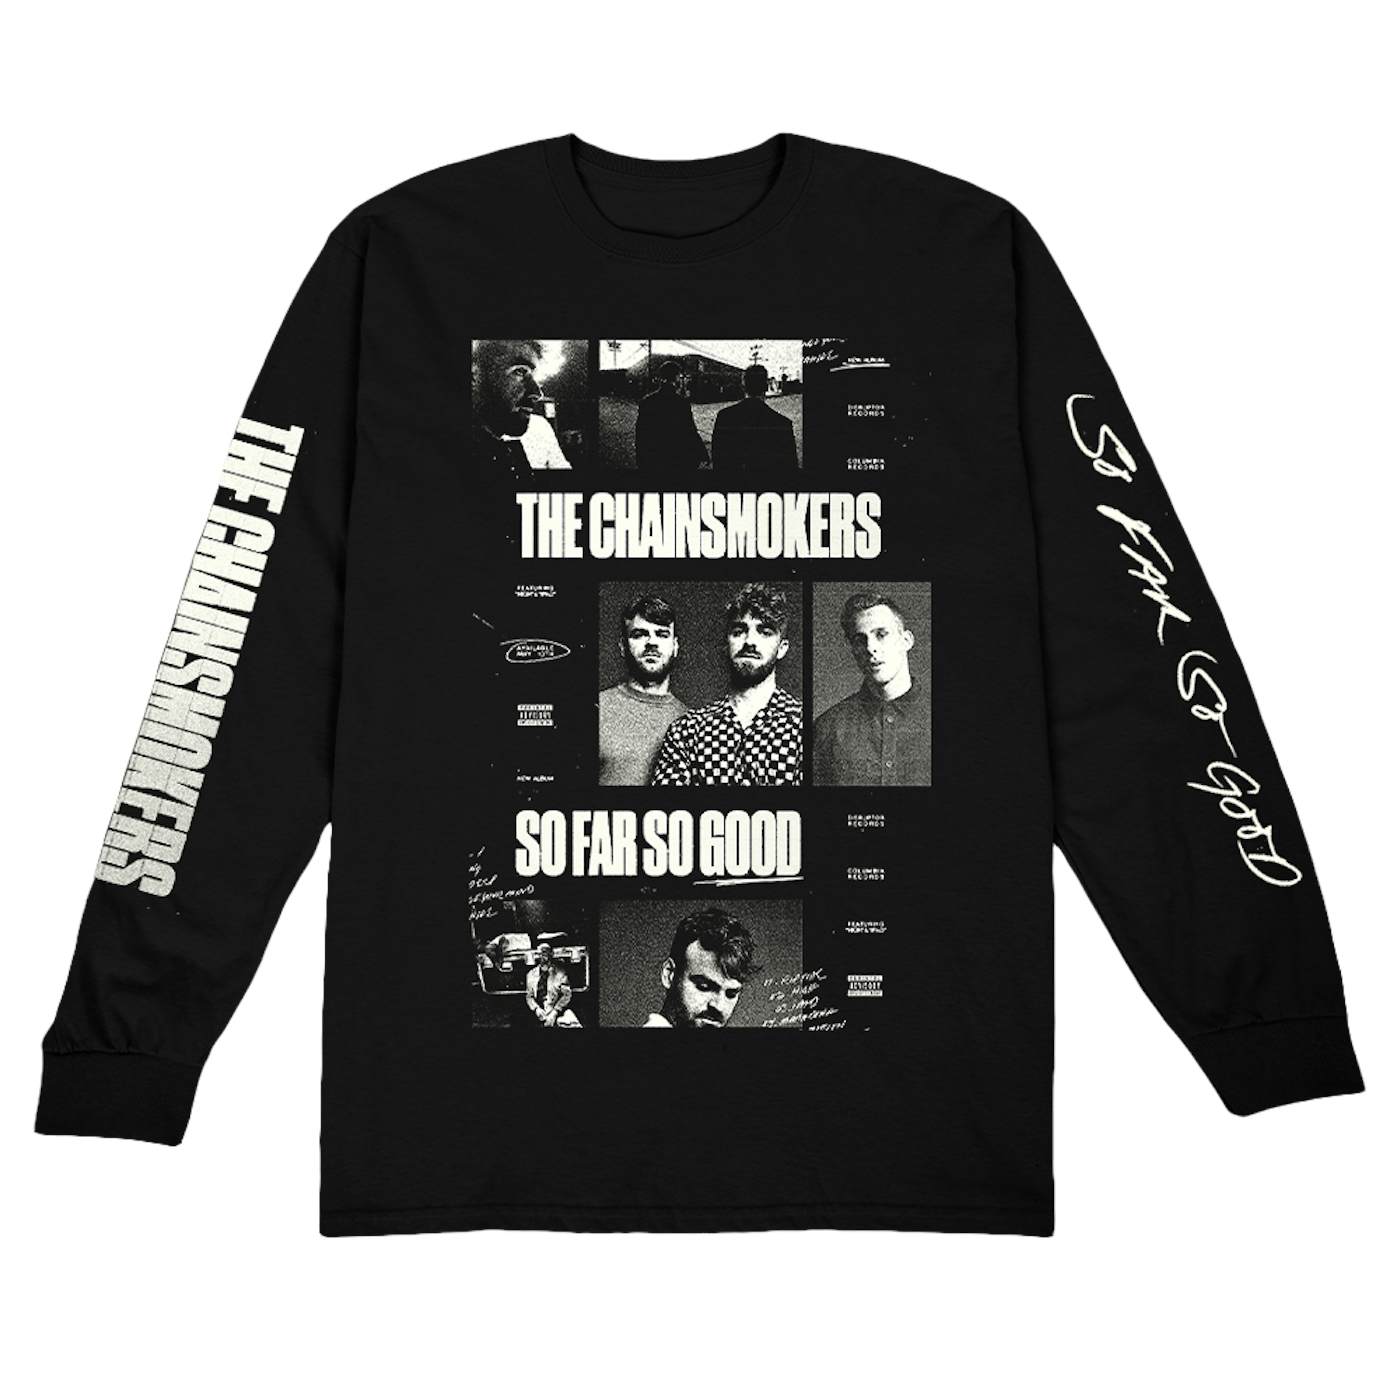 The Chainsmokers "So Far So Good" Grid Long Sleeve